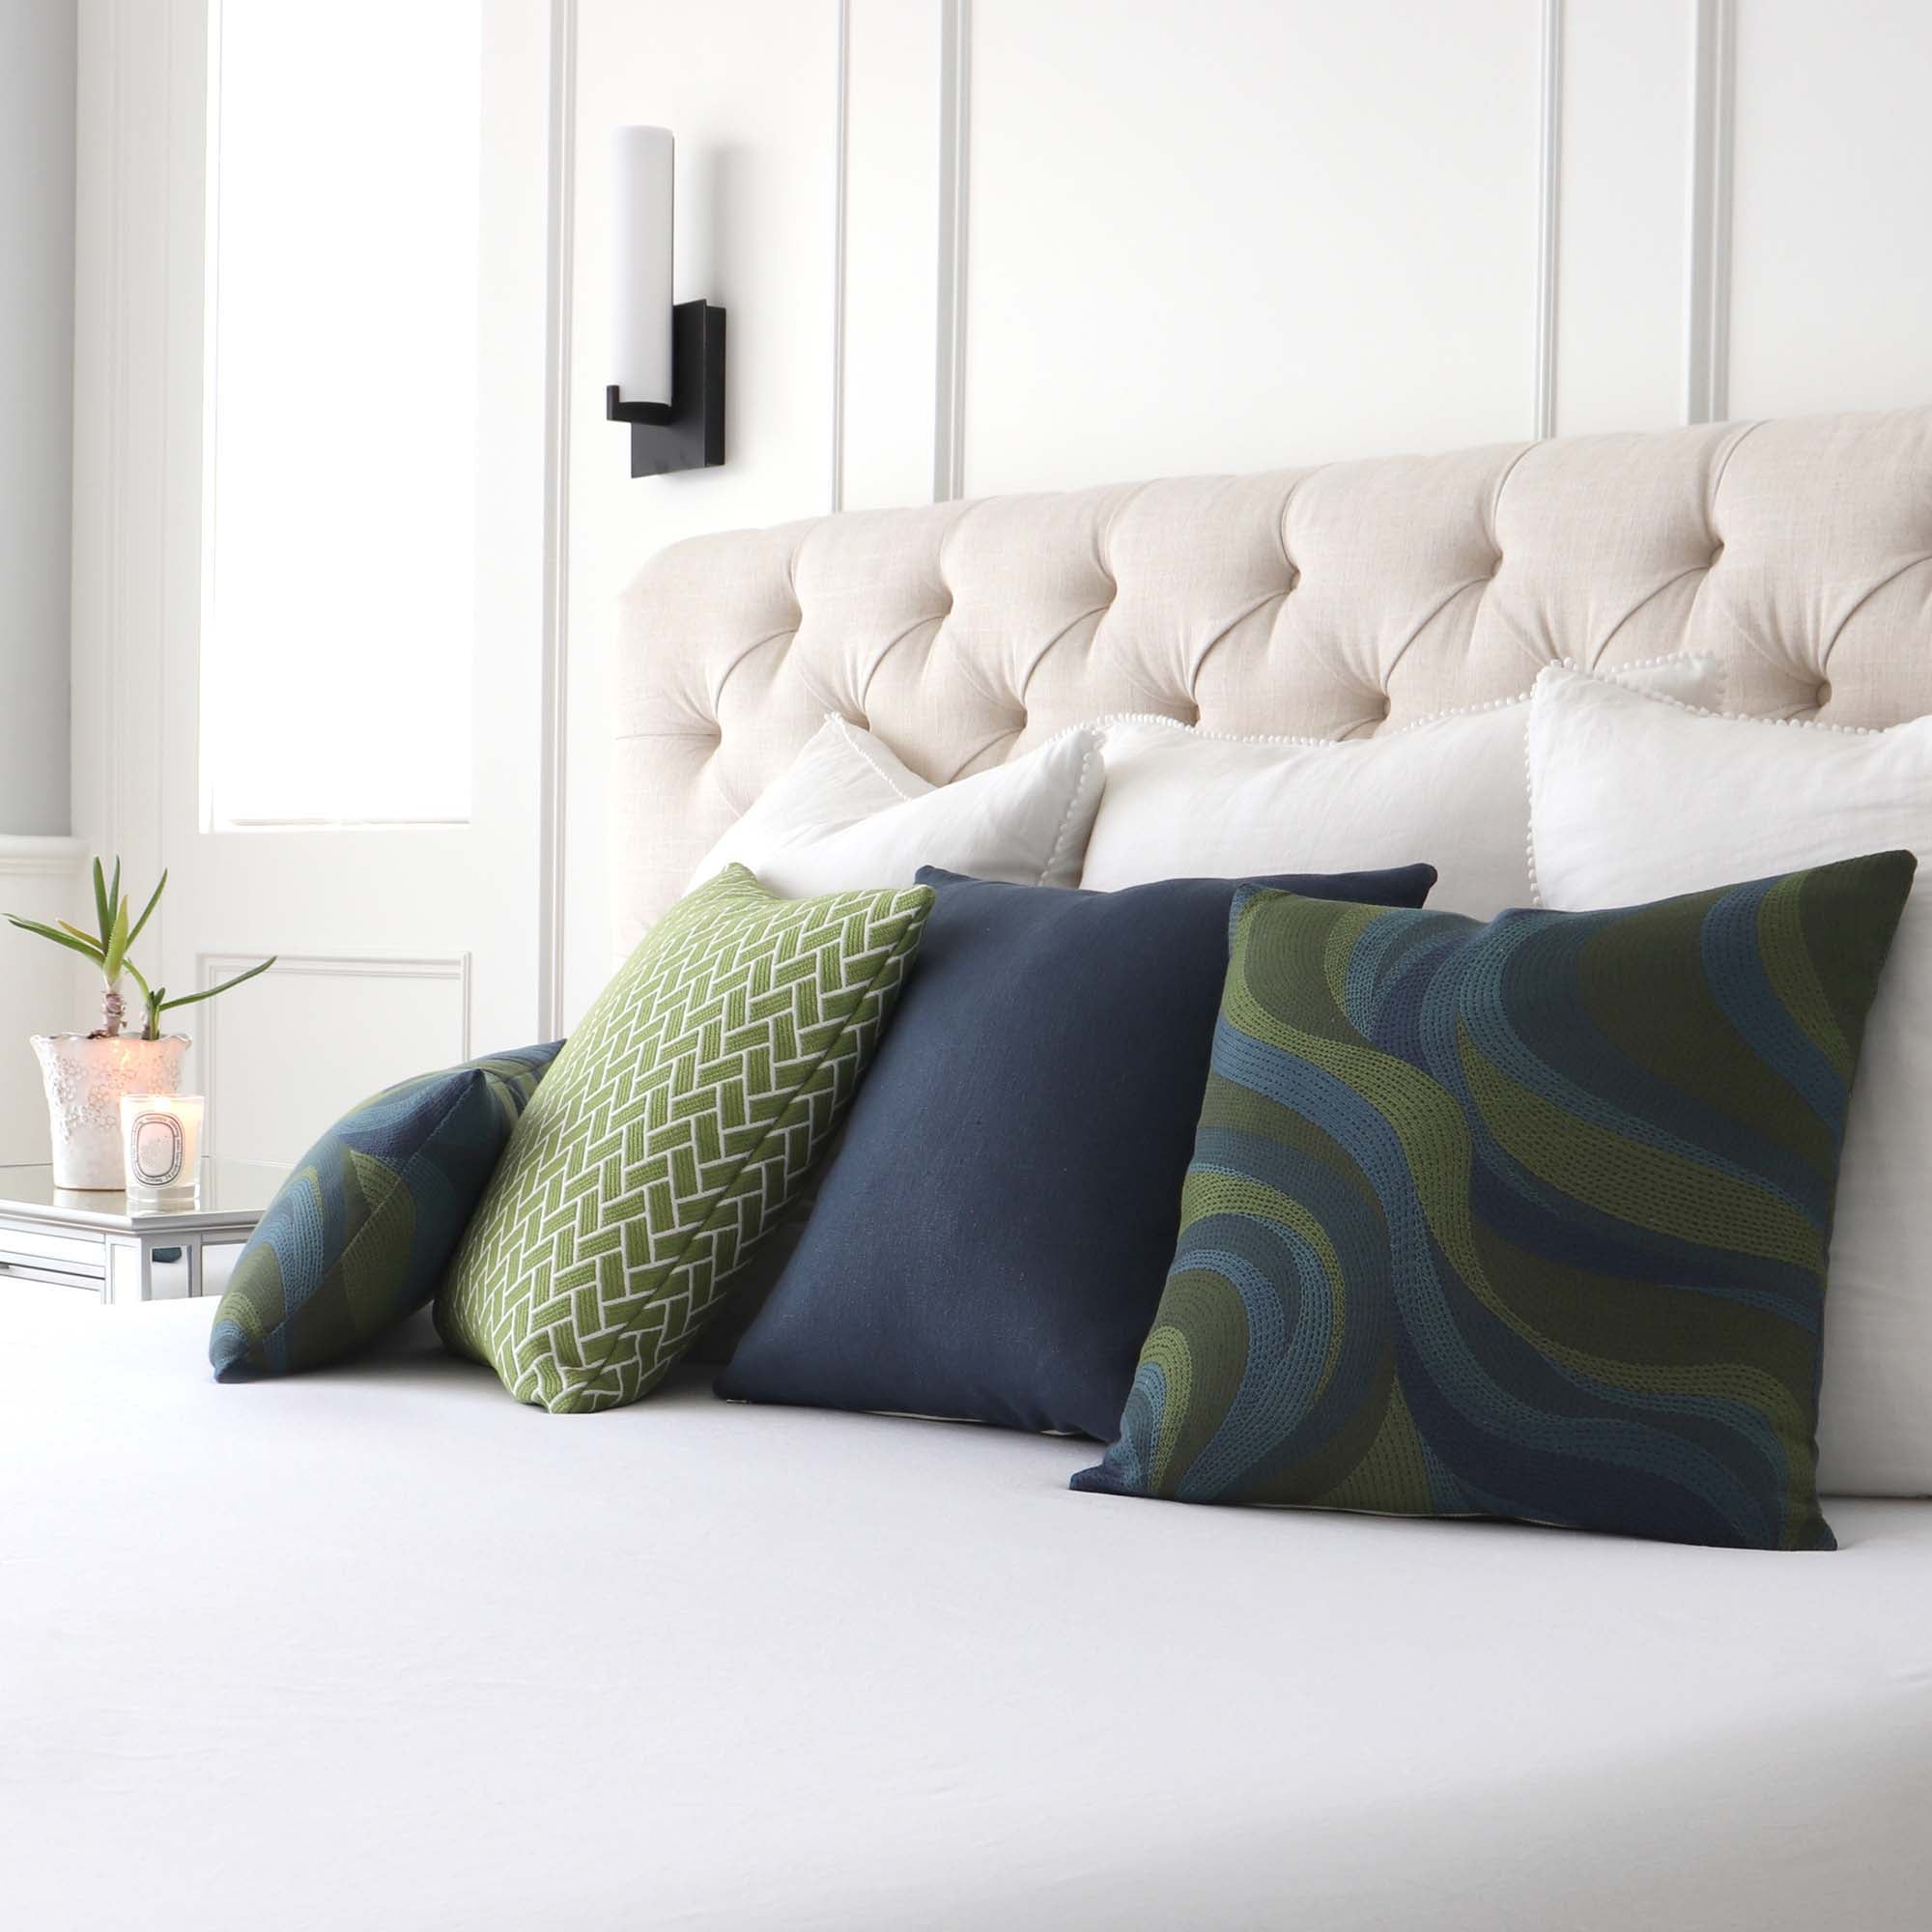 Bed Pillow Pillows For Bedroom Home Nursing Pillows Big Decorative